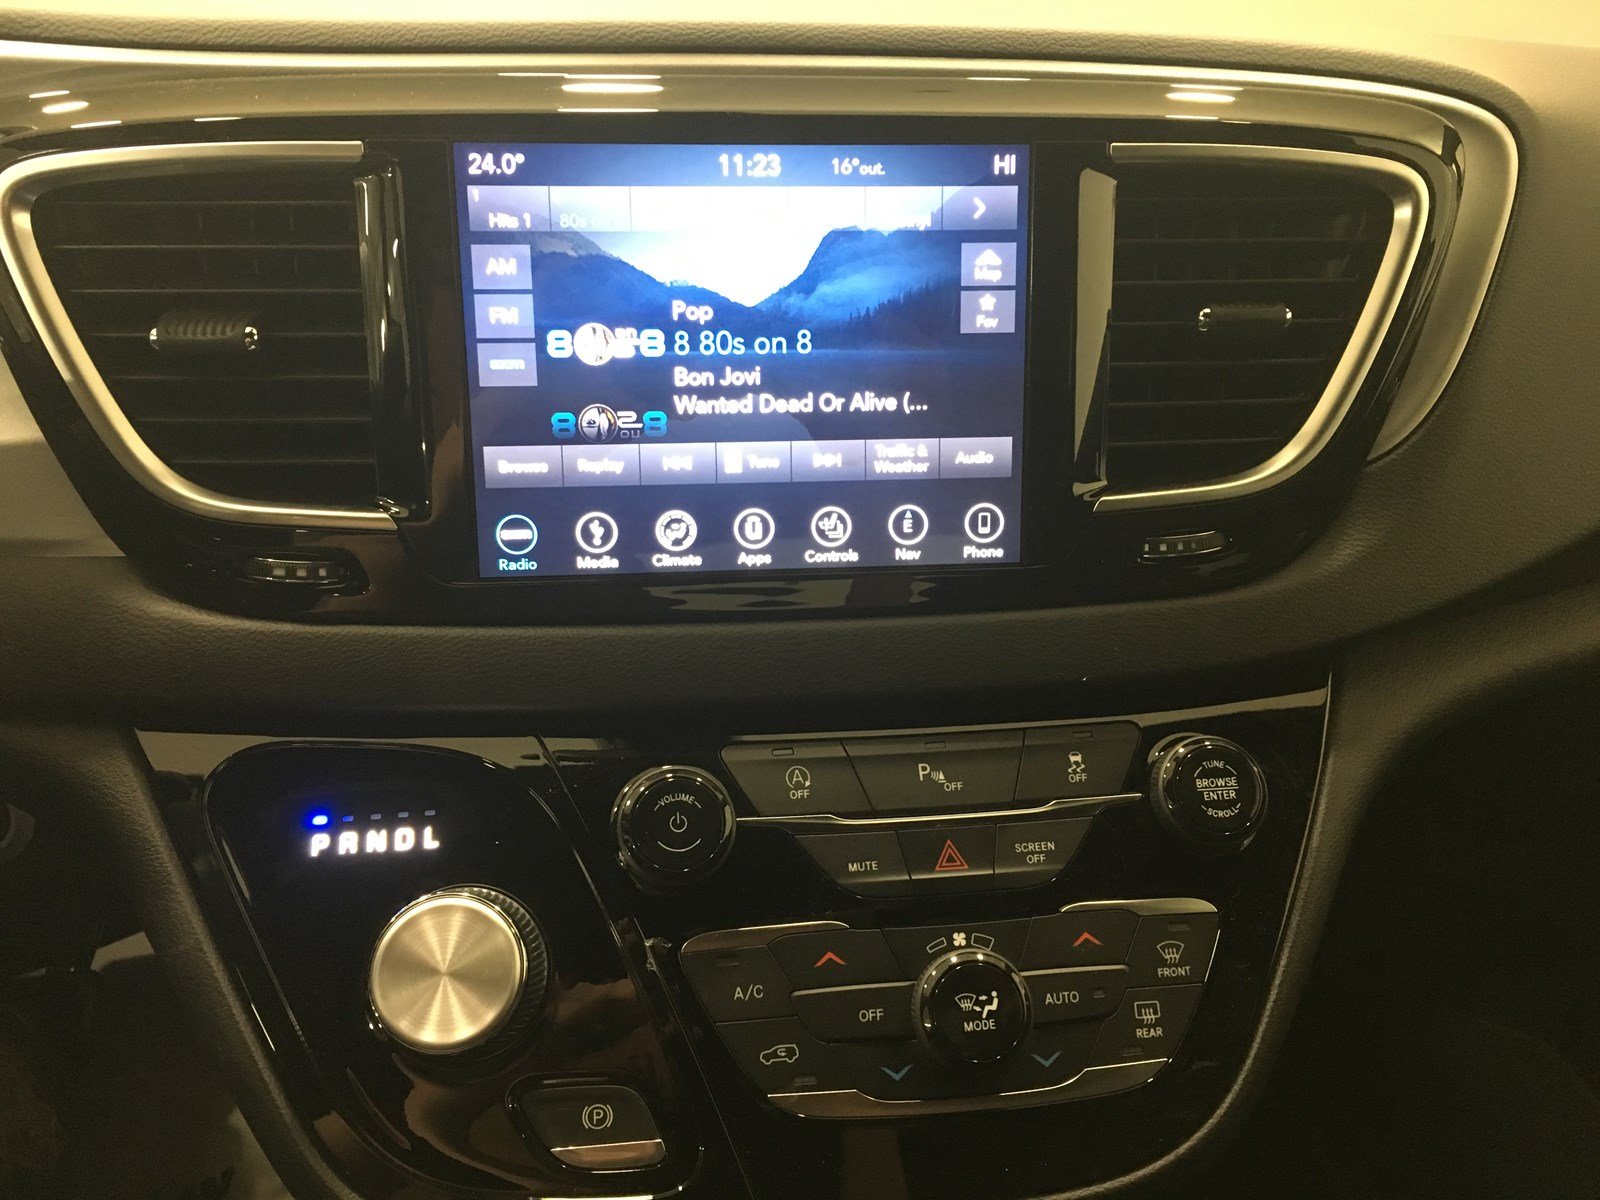 New 2019 Chrysler Pacifica TouringL 'S' Navigation DVD Minivan